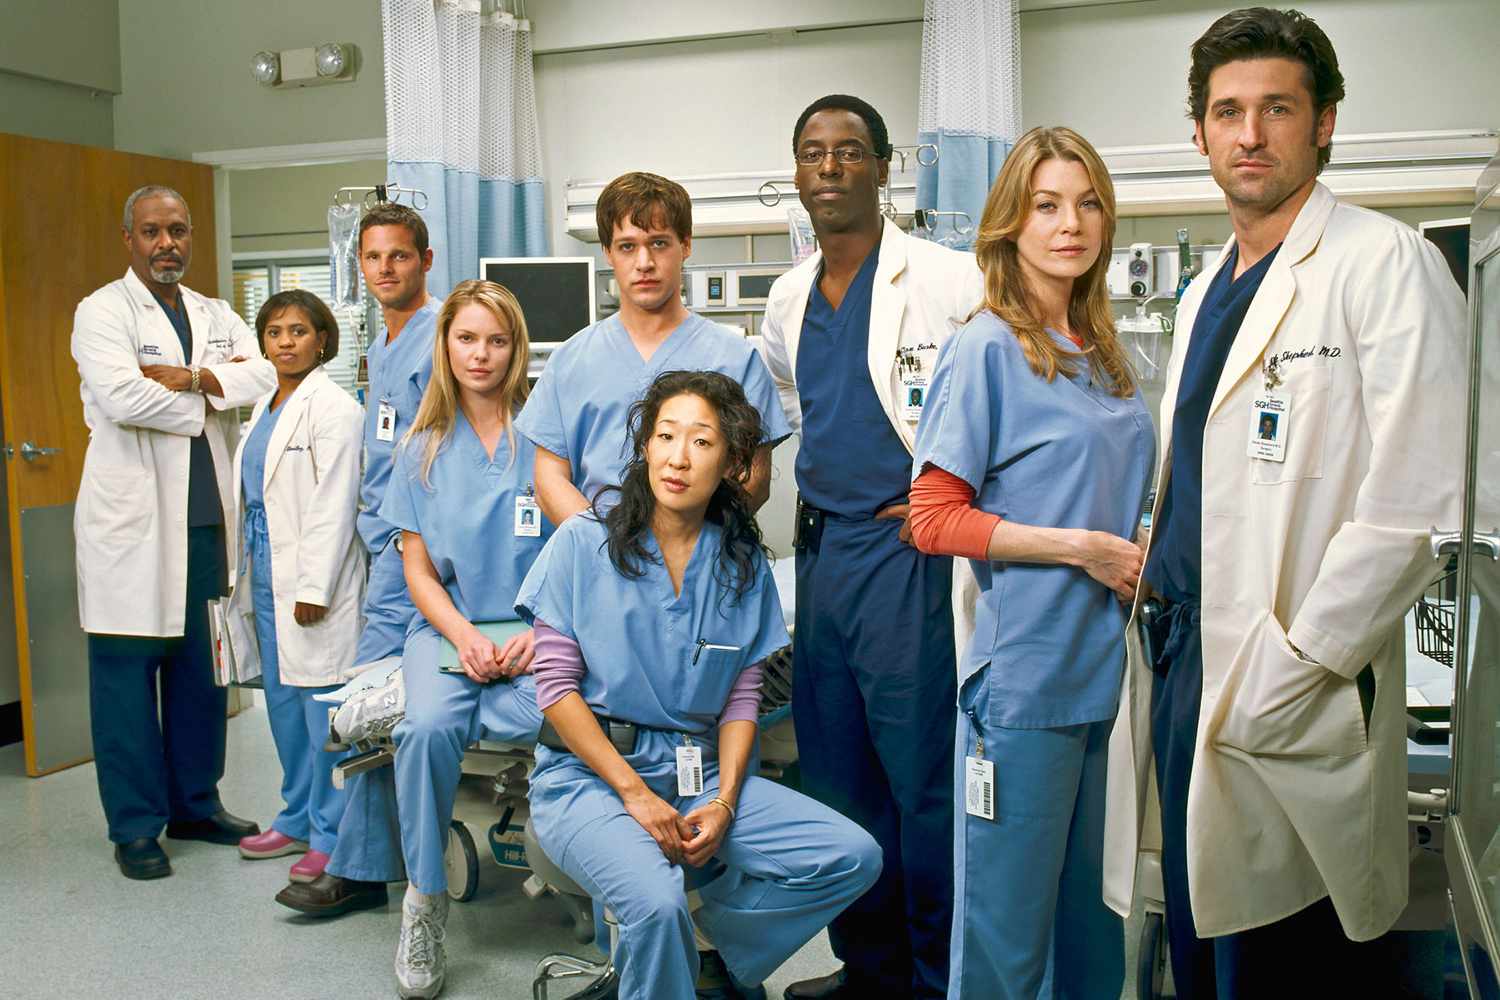 Grey's Anatomy Season 20 A Nostalgic Return Sparks Excitement Among Fans